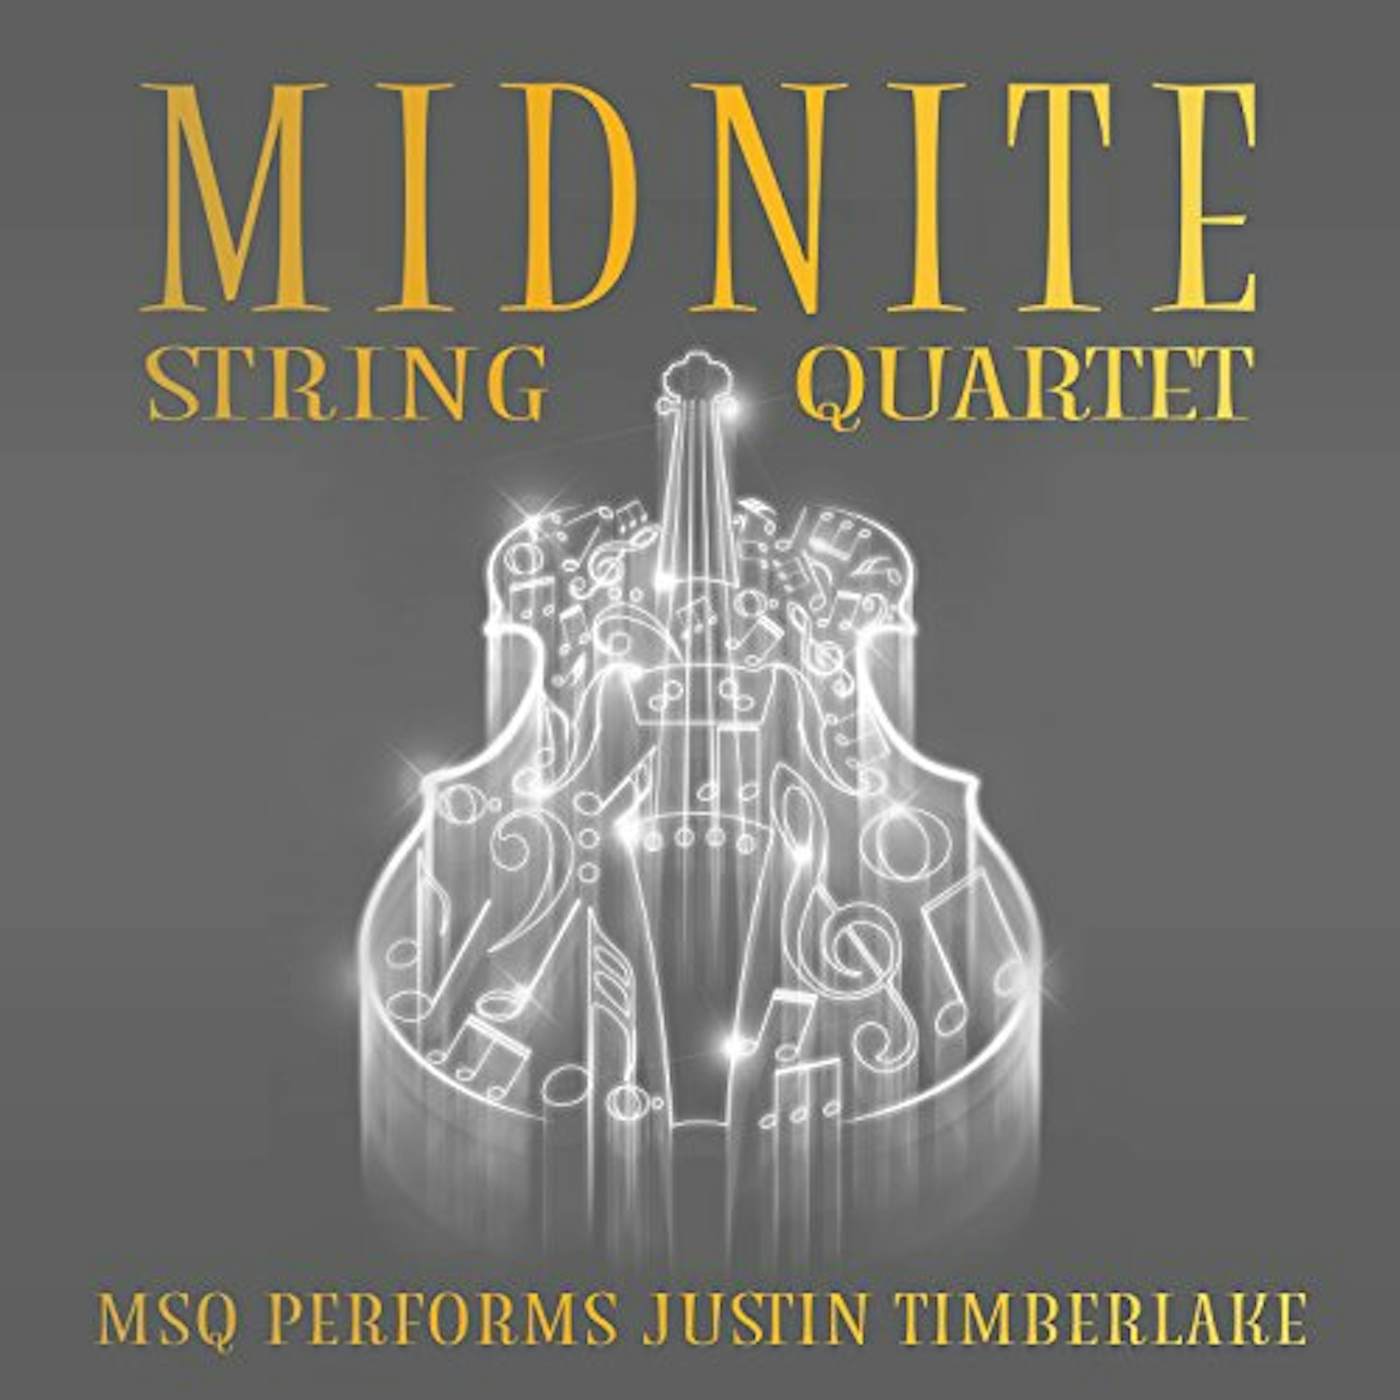 Midnite String Quartet MSQ PERFORMS JUSTIN TIMBERLAKE (MOD) CD